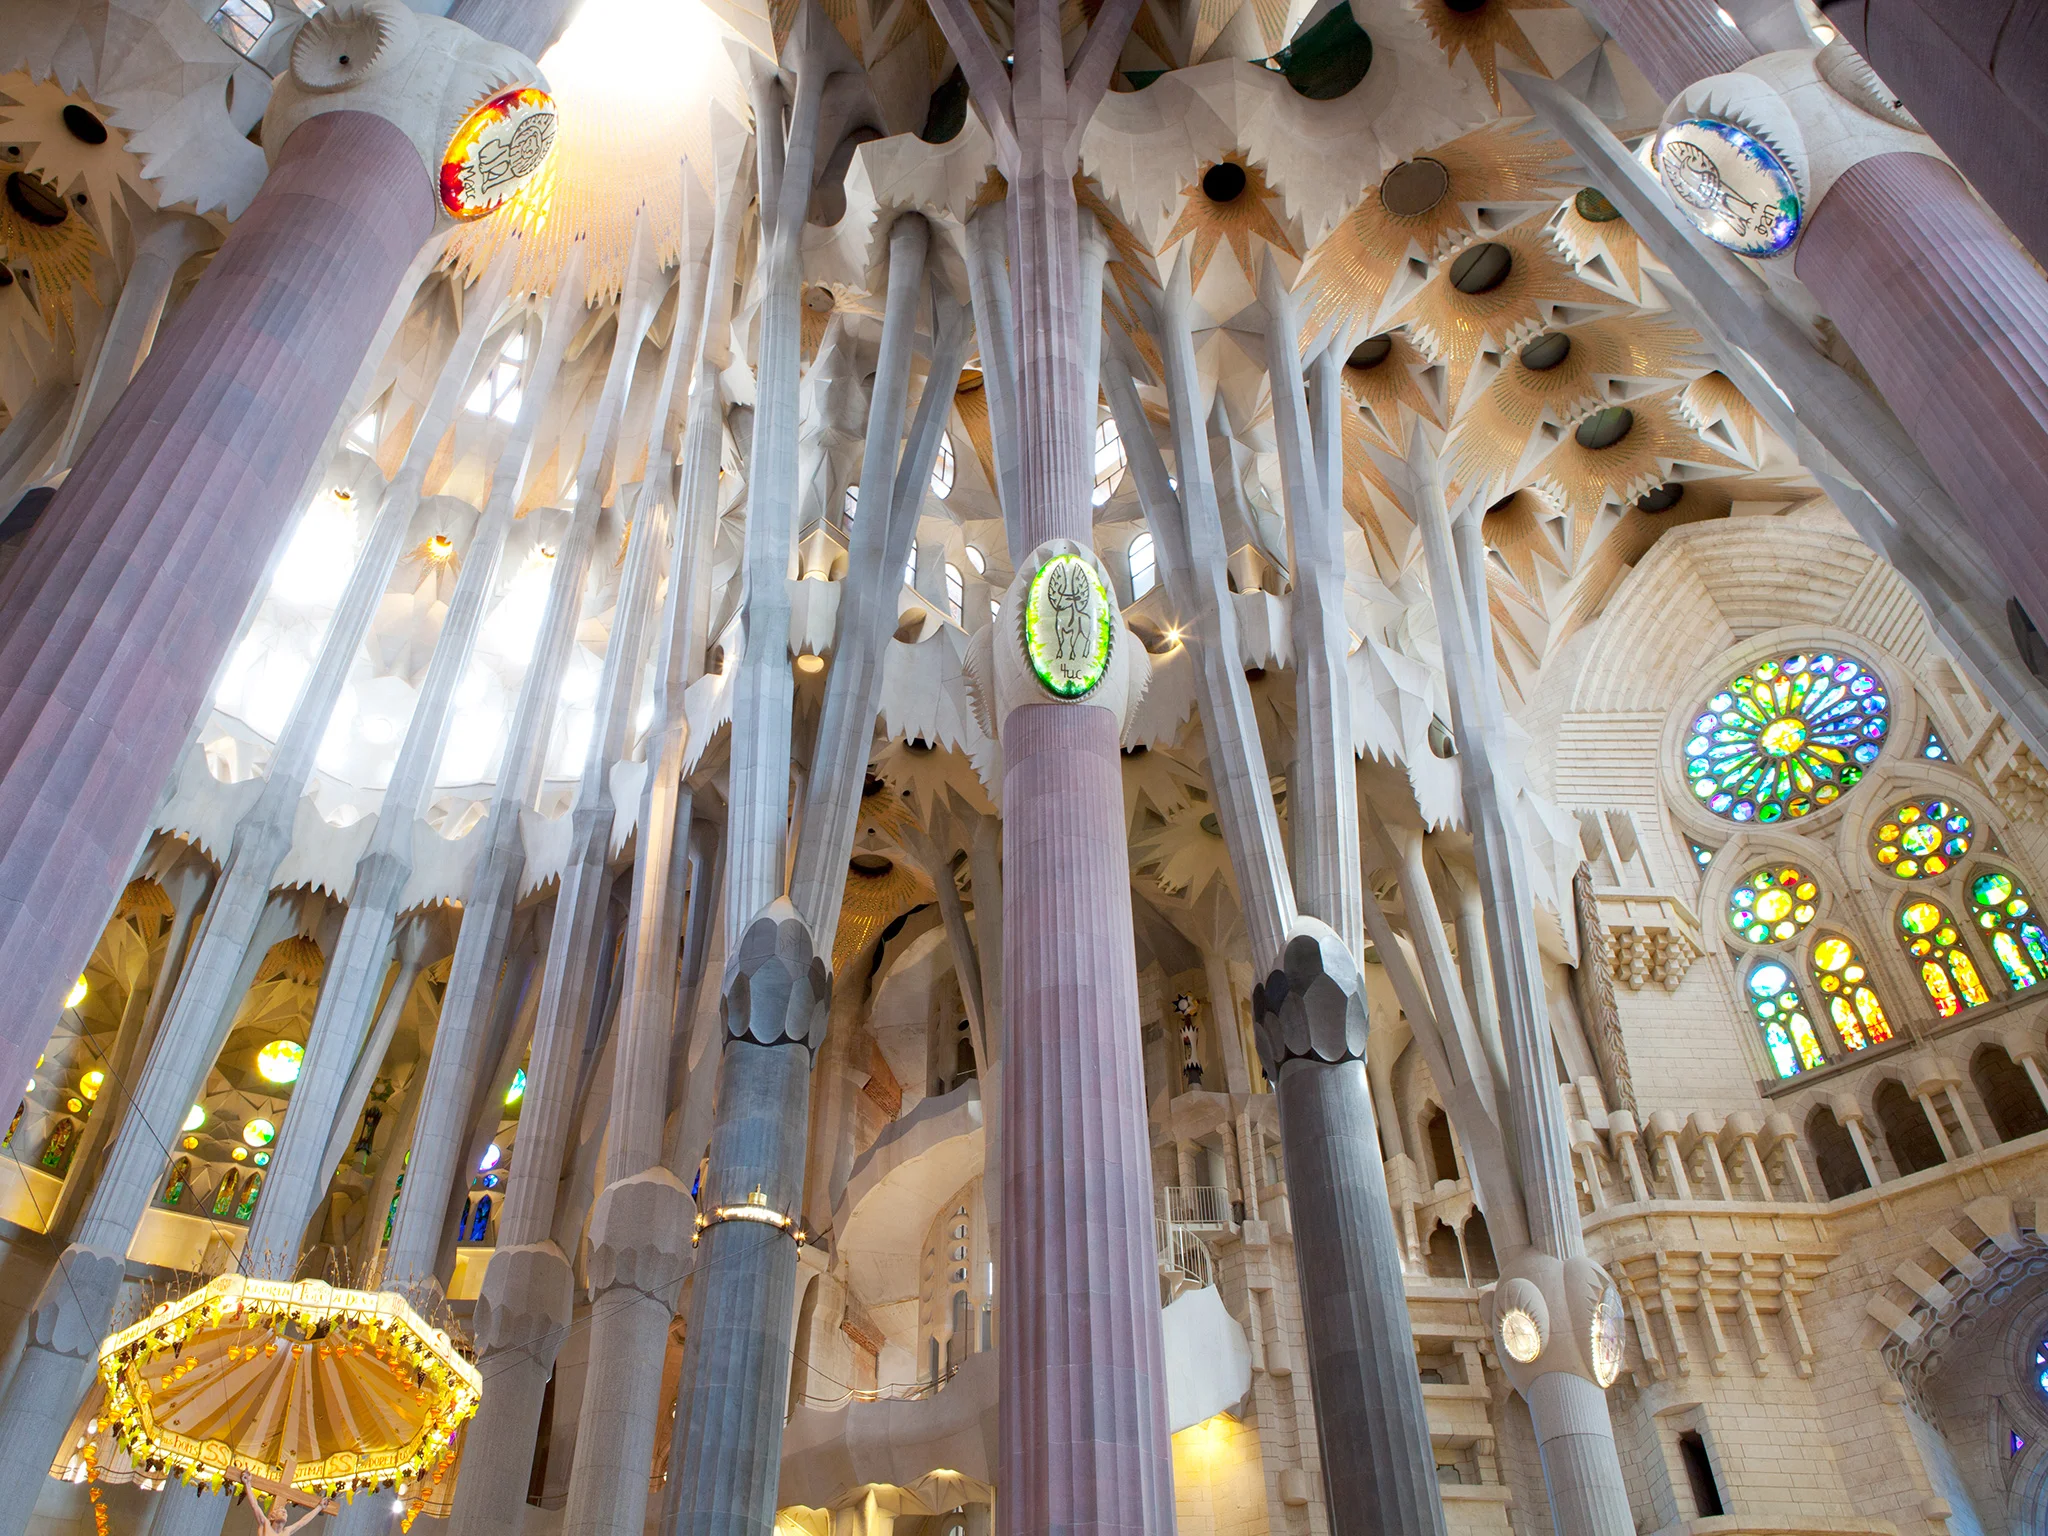 Sagrada Familia by Gaudi - Basilica in Barcelona, Spain - 137 Year Project 18